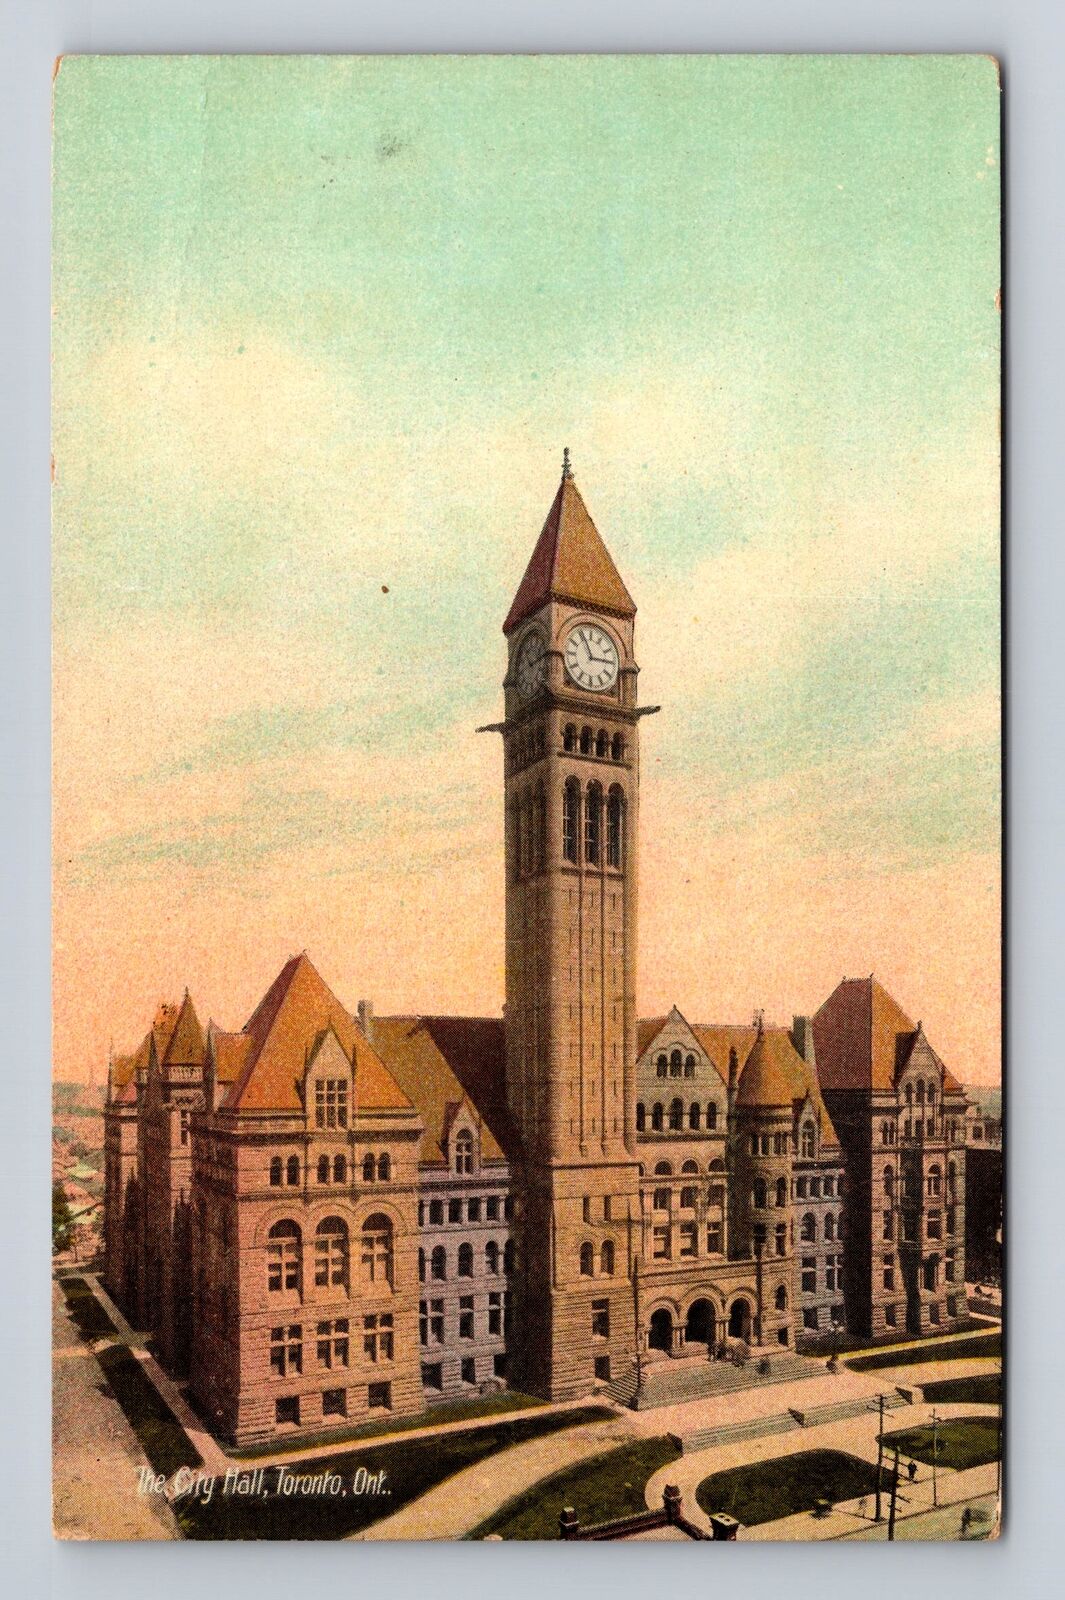 Toronto Ontario Canada, Historic 1899 City Hall, Clock Tower, Vintage Postcard